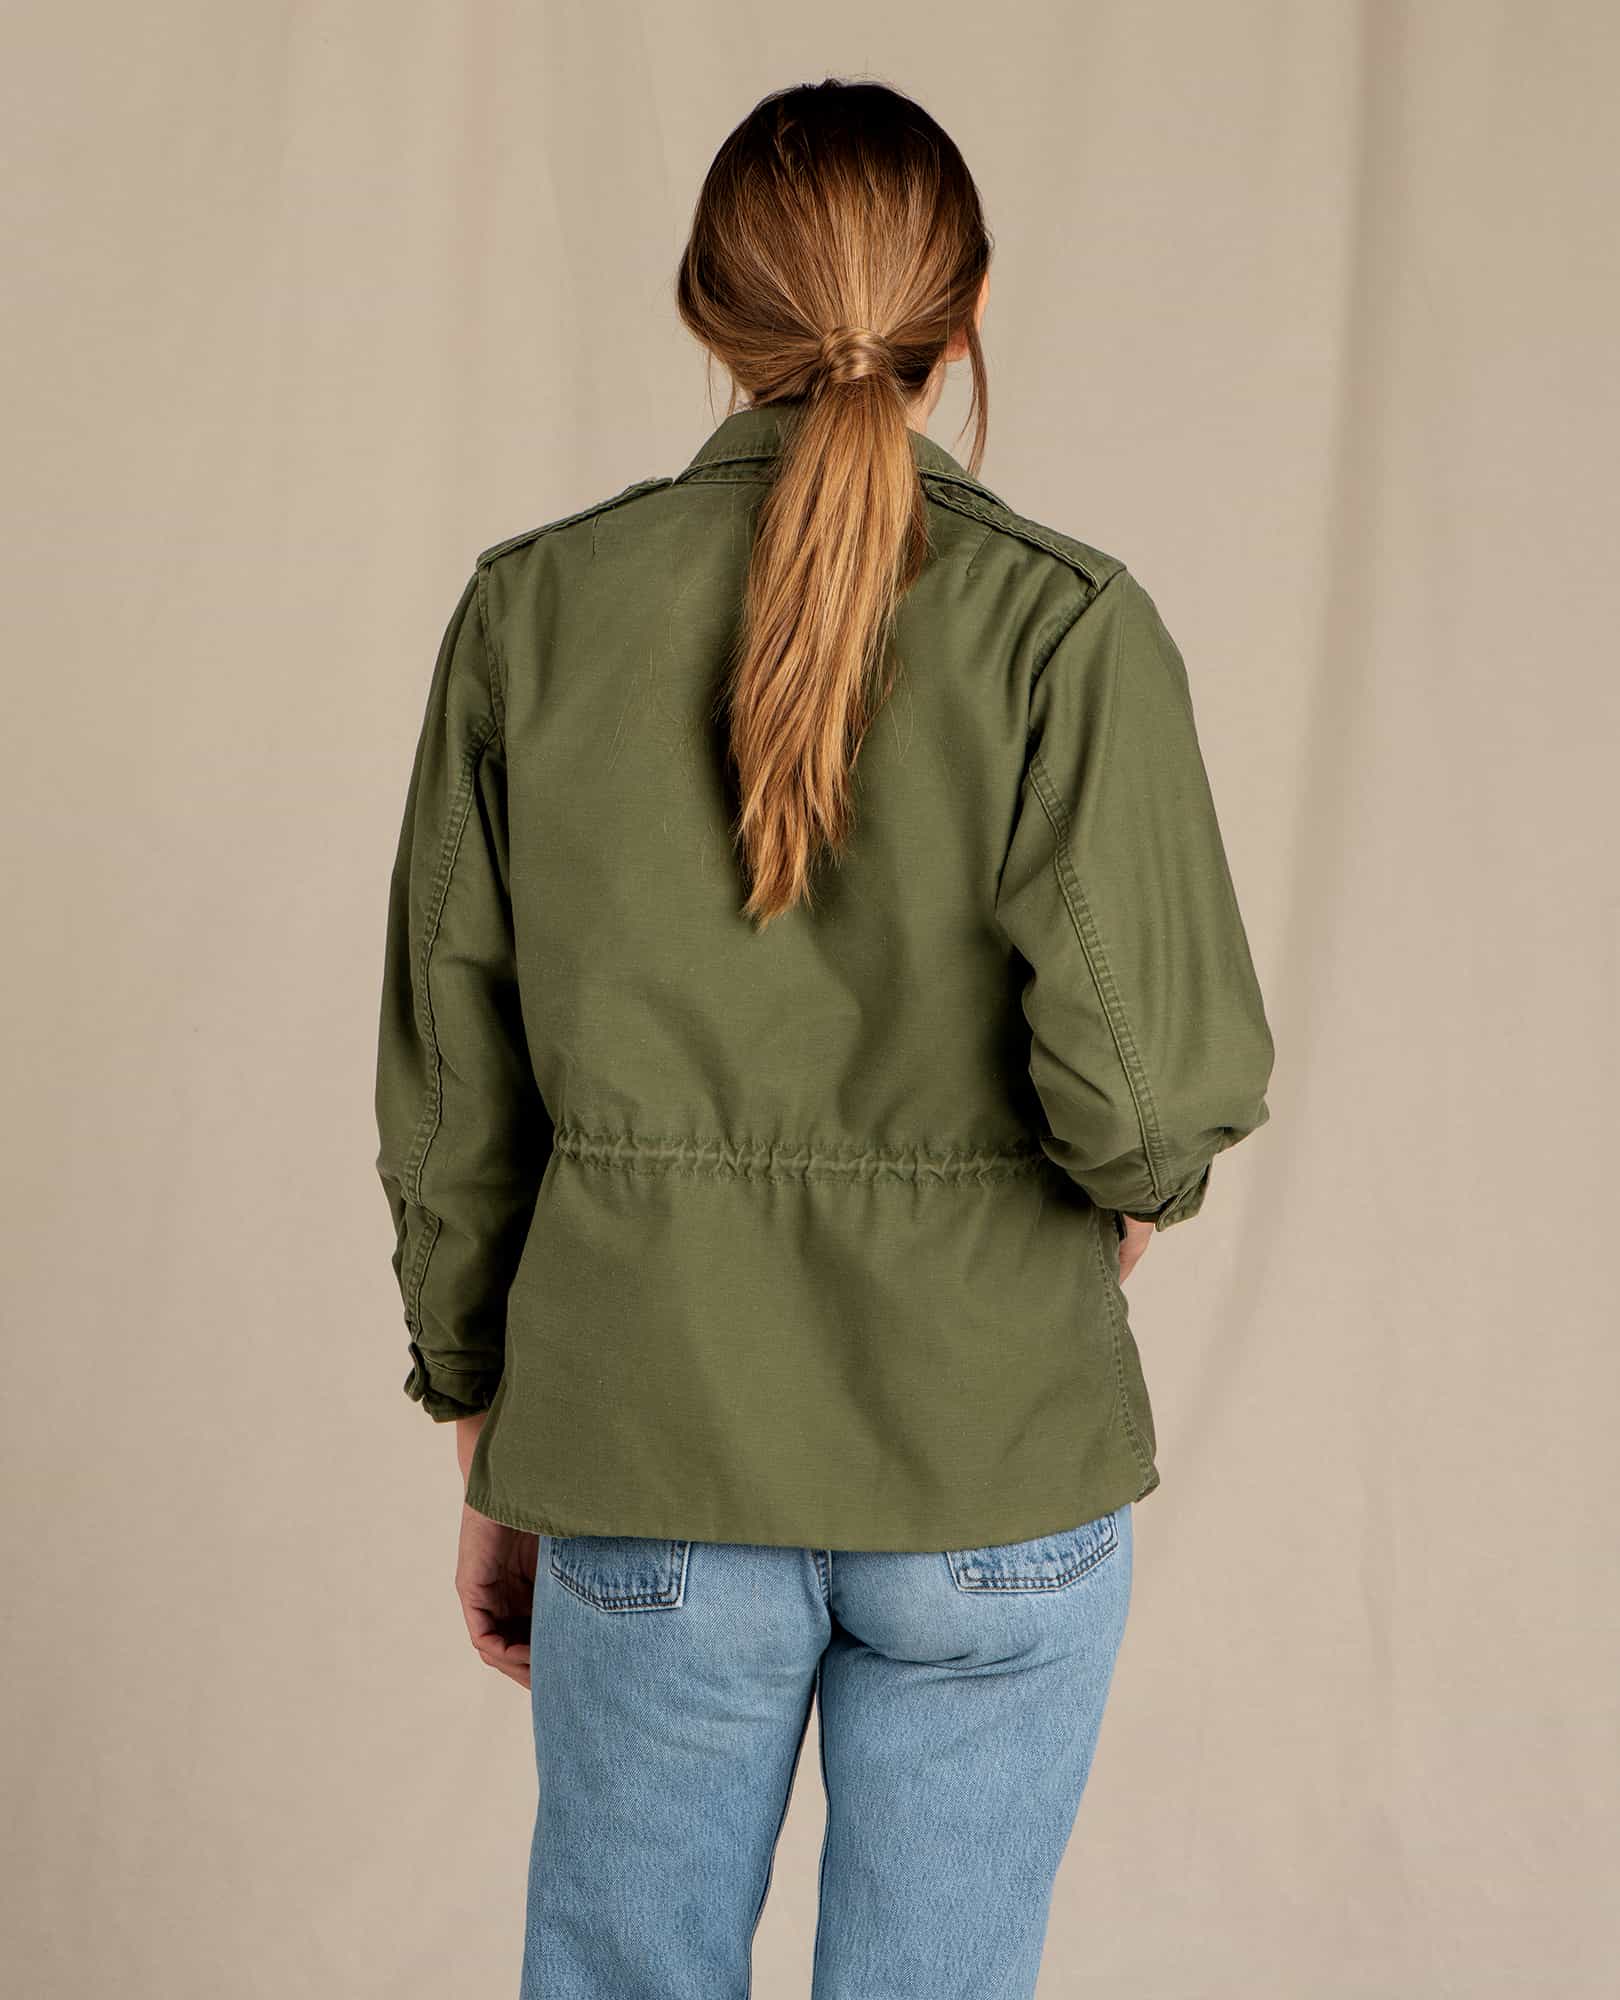 Women's Vintage Military Field Jacket